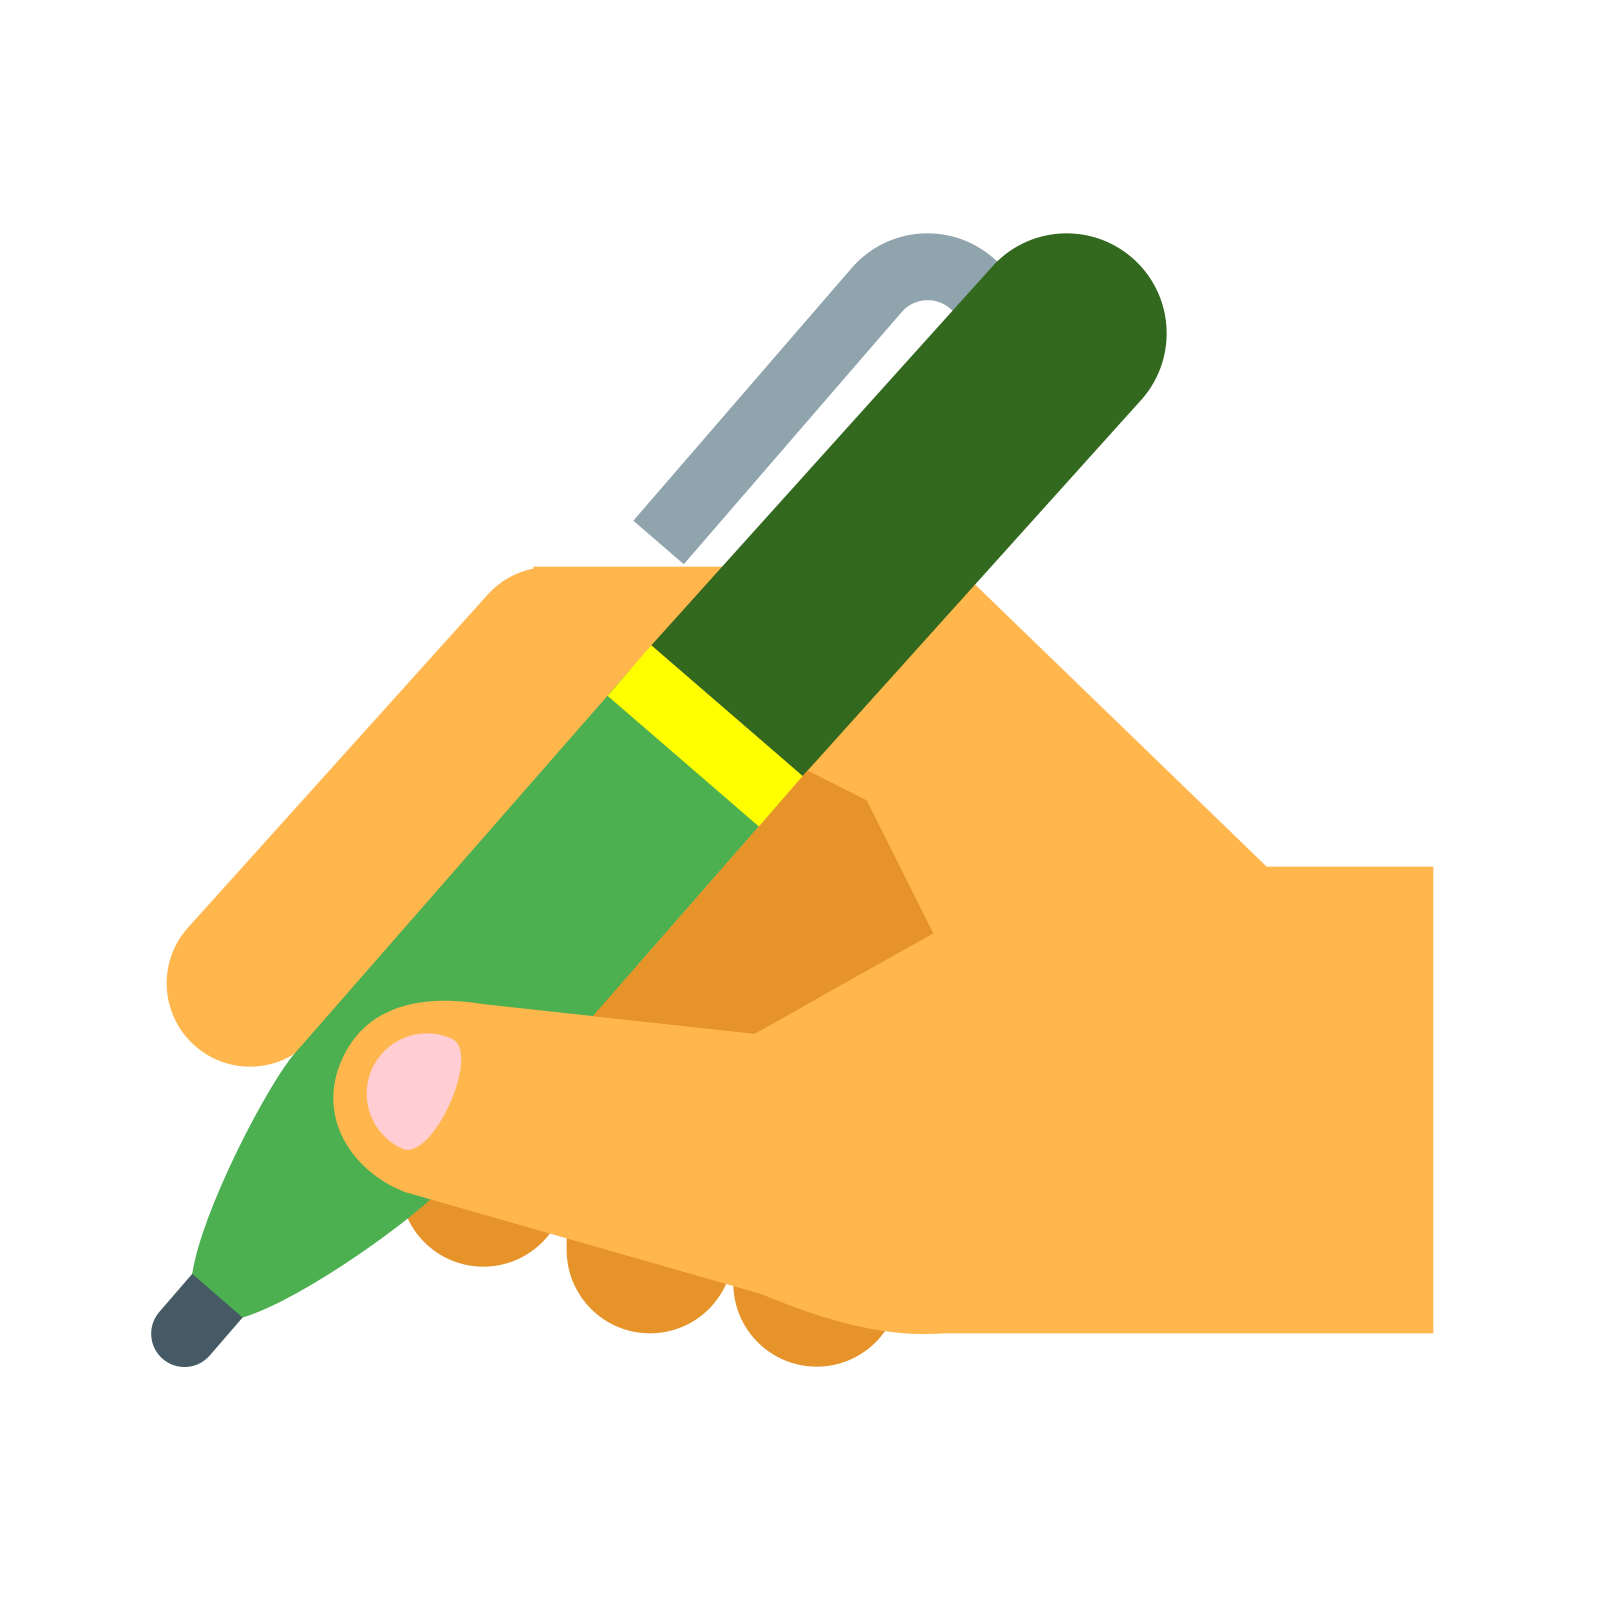 Pen Pencil Clipart Transparent PNG Hd, Pen Pen Pencil Pen Word, Hand Drawn Pen, Pen Illustration ...